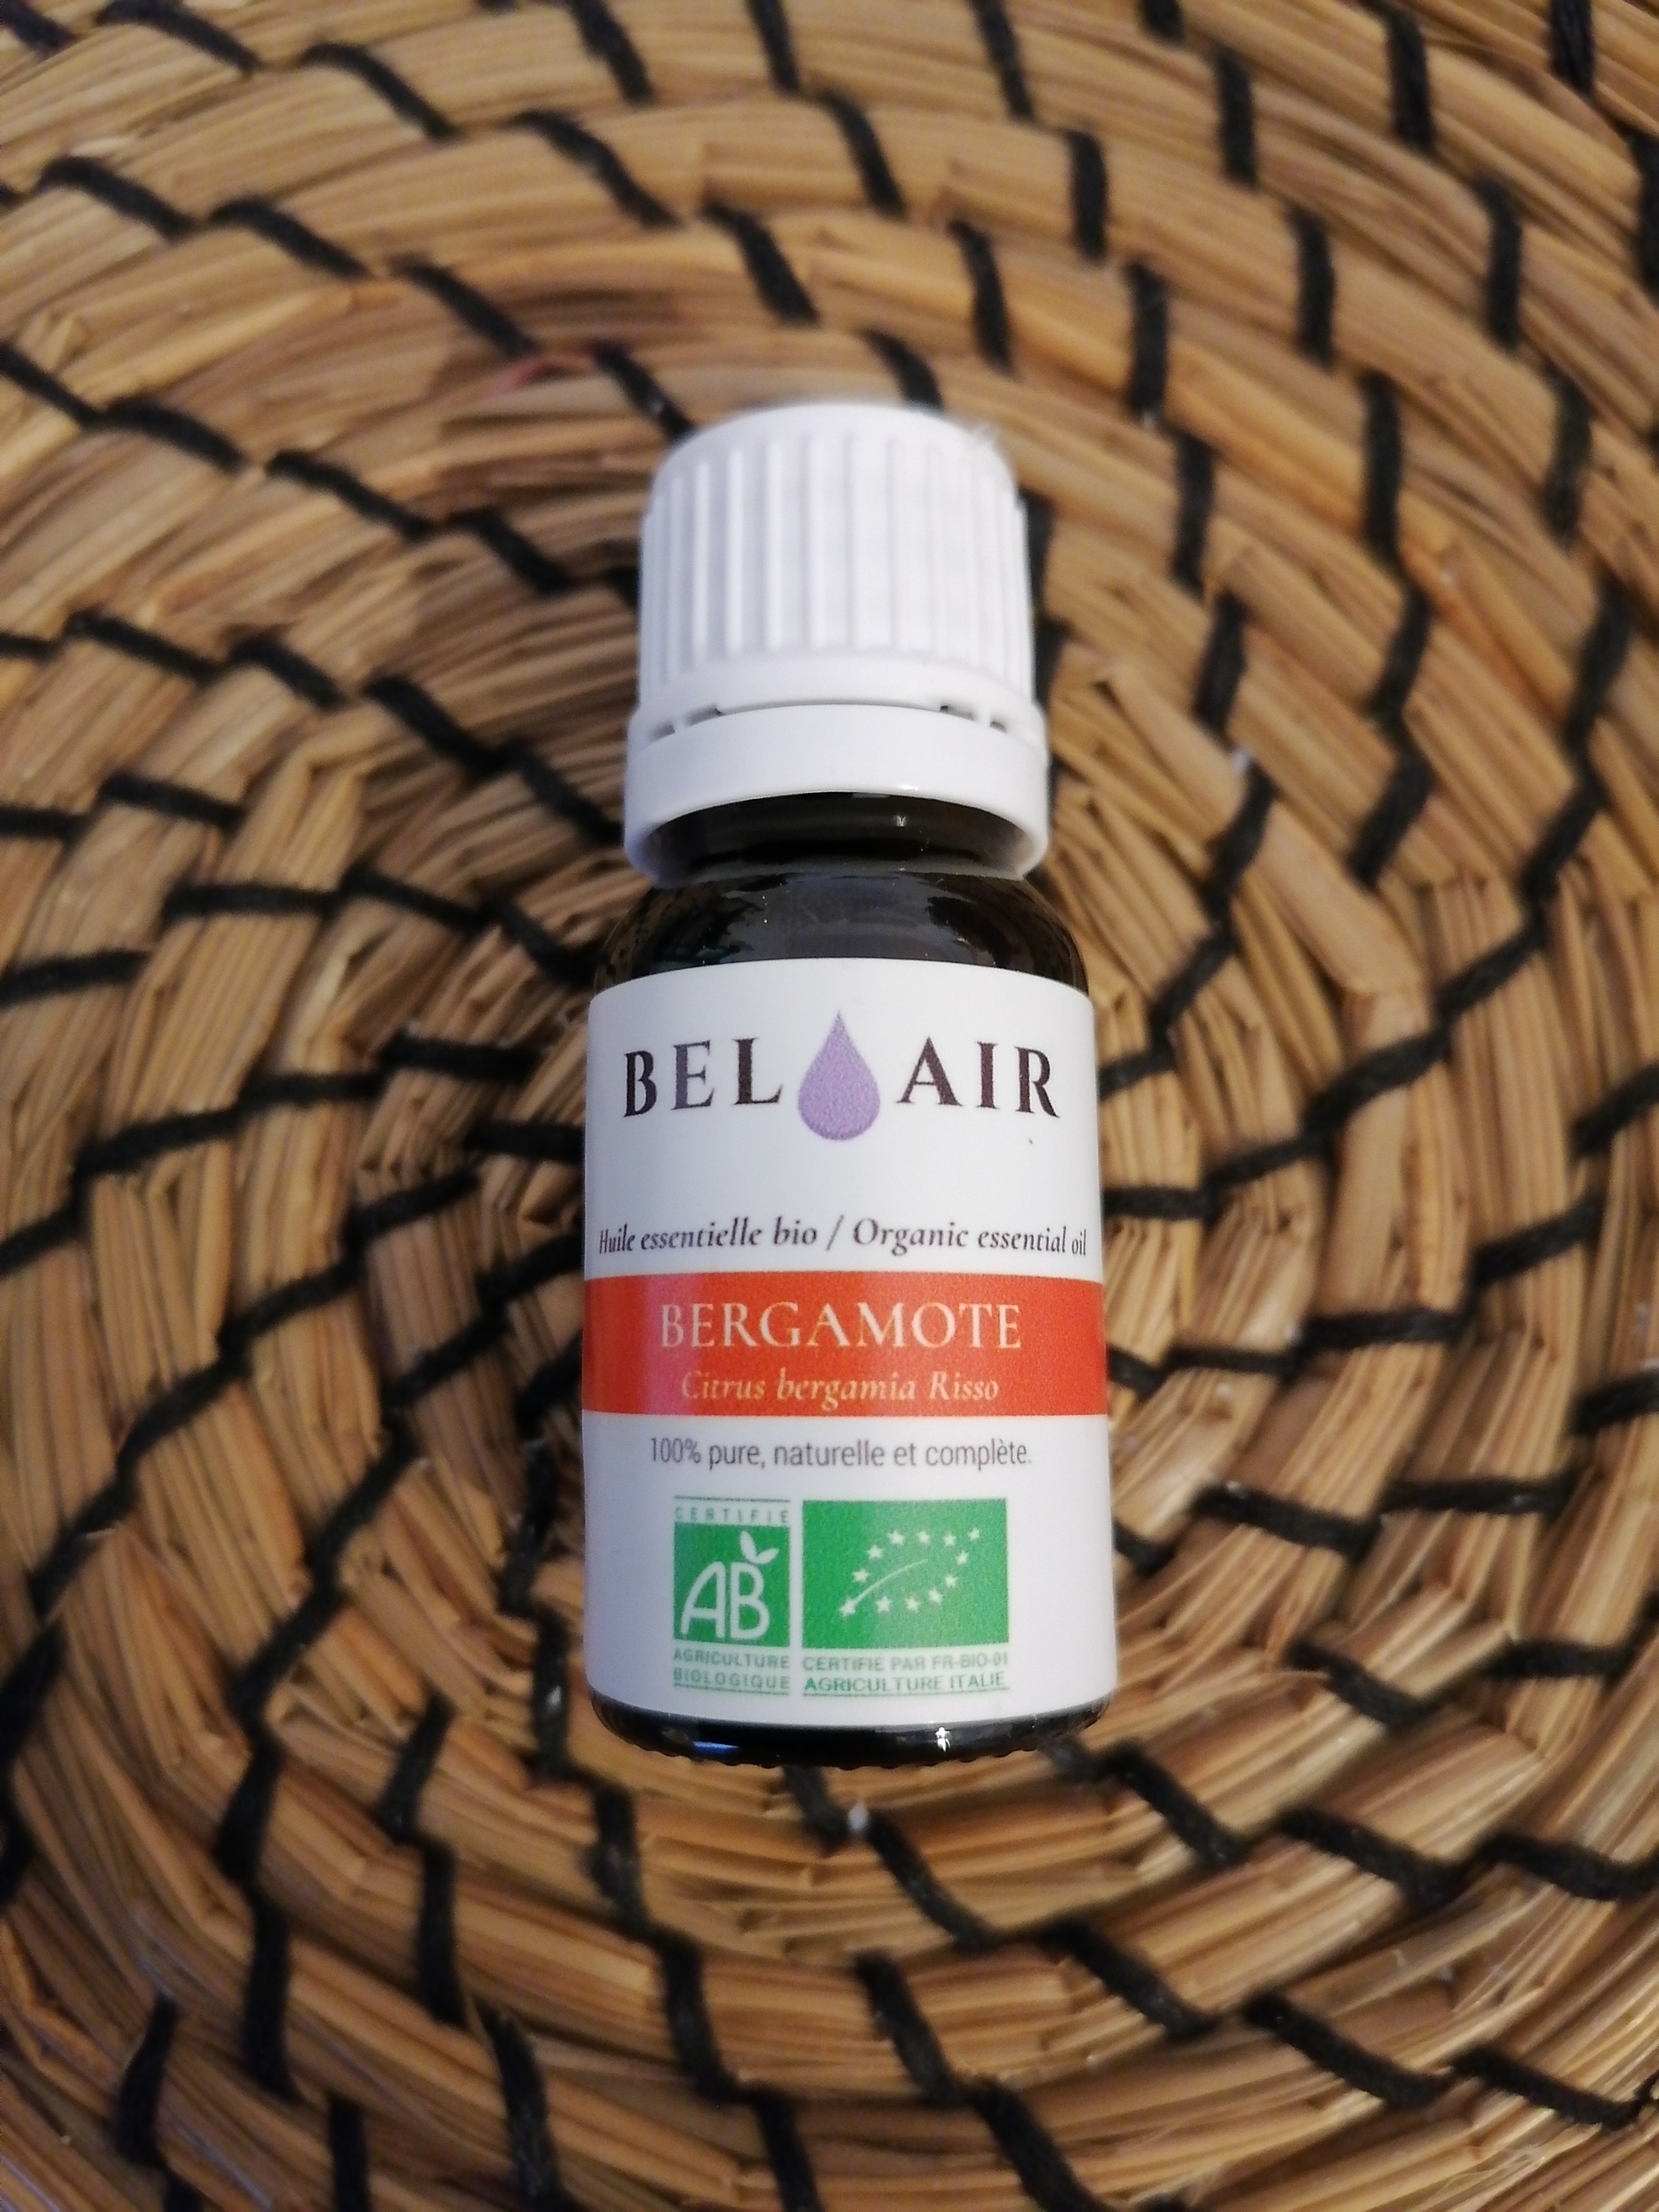 he-bergamote-huile-essentielle-de-bergamote-bel-air-bio-herboristerie